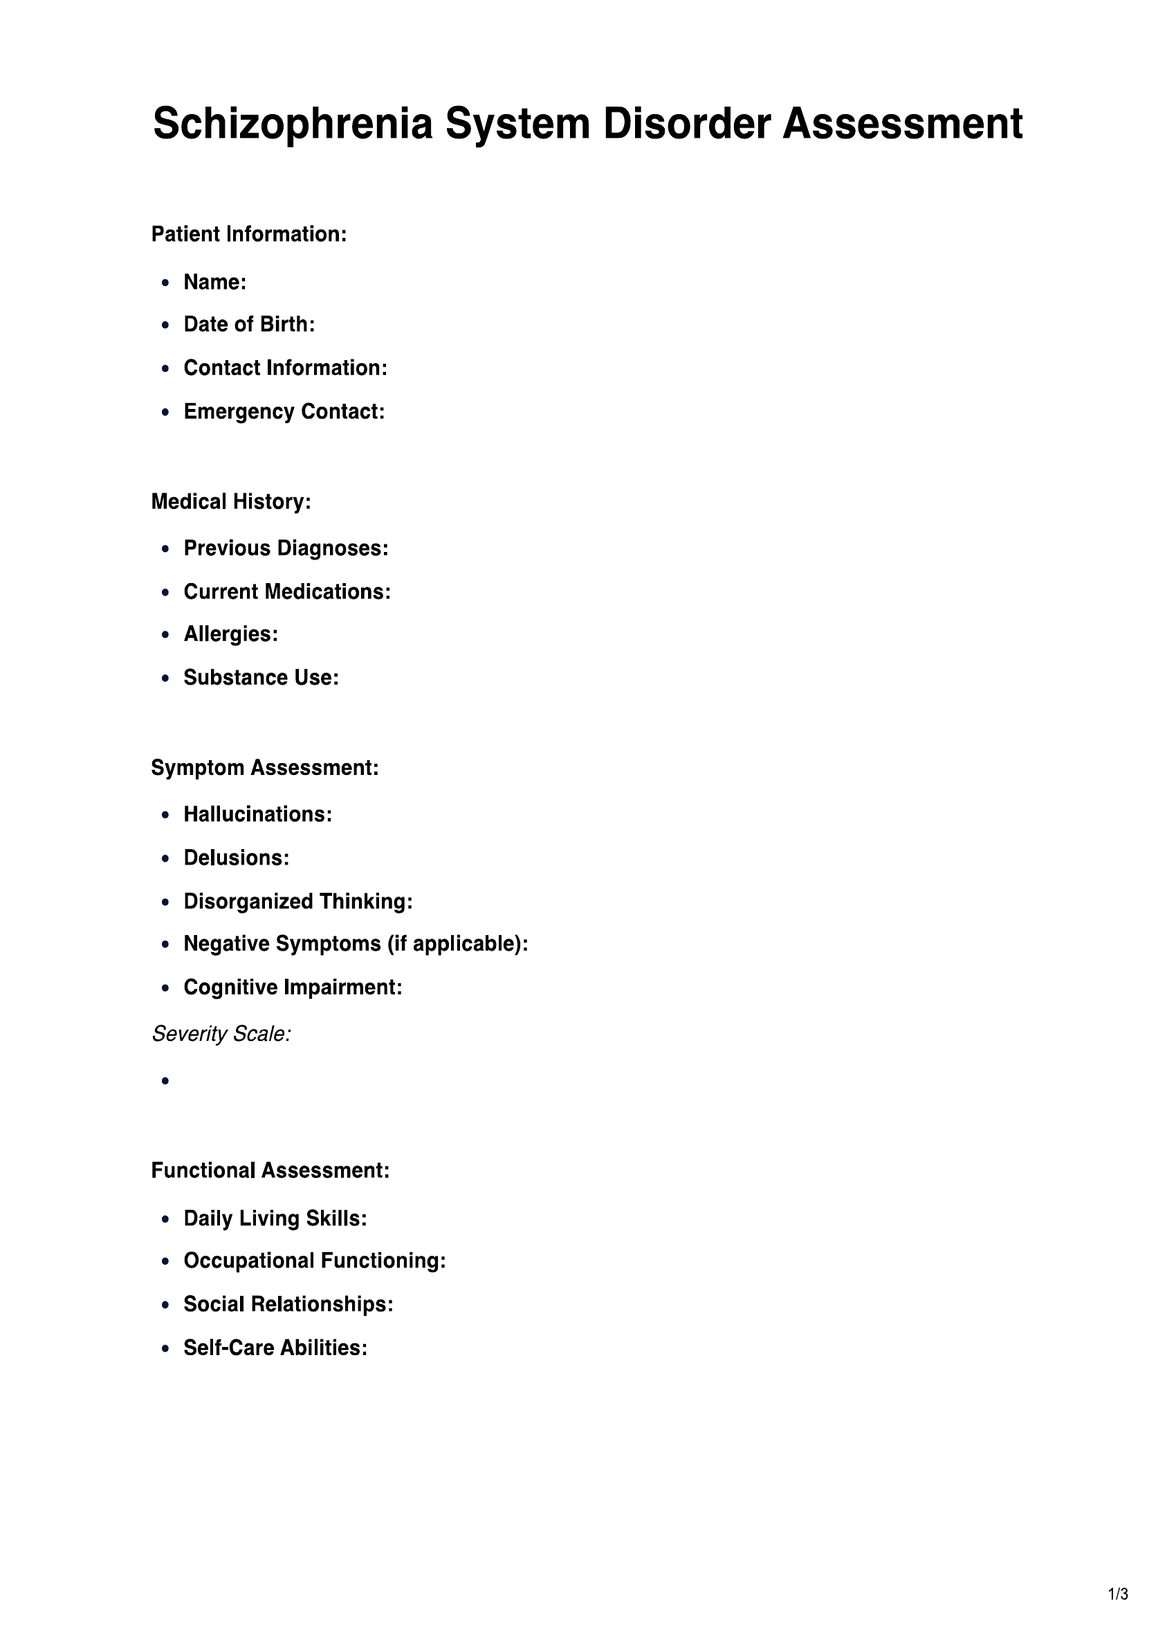 Schizophrenia System Disorder PDF Example